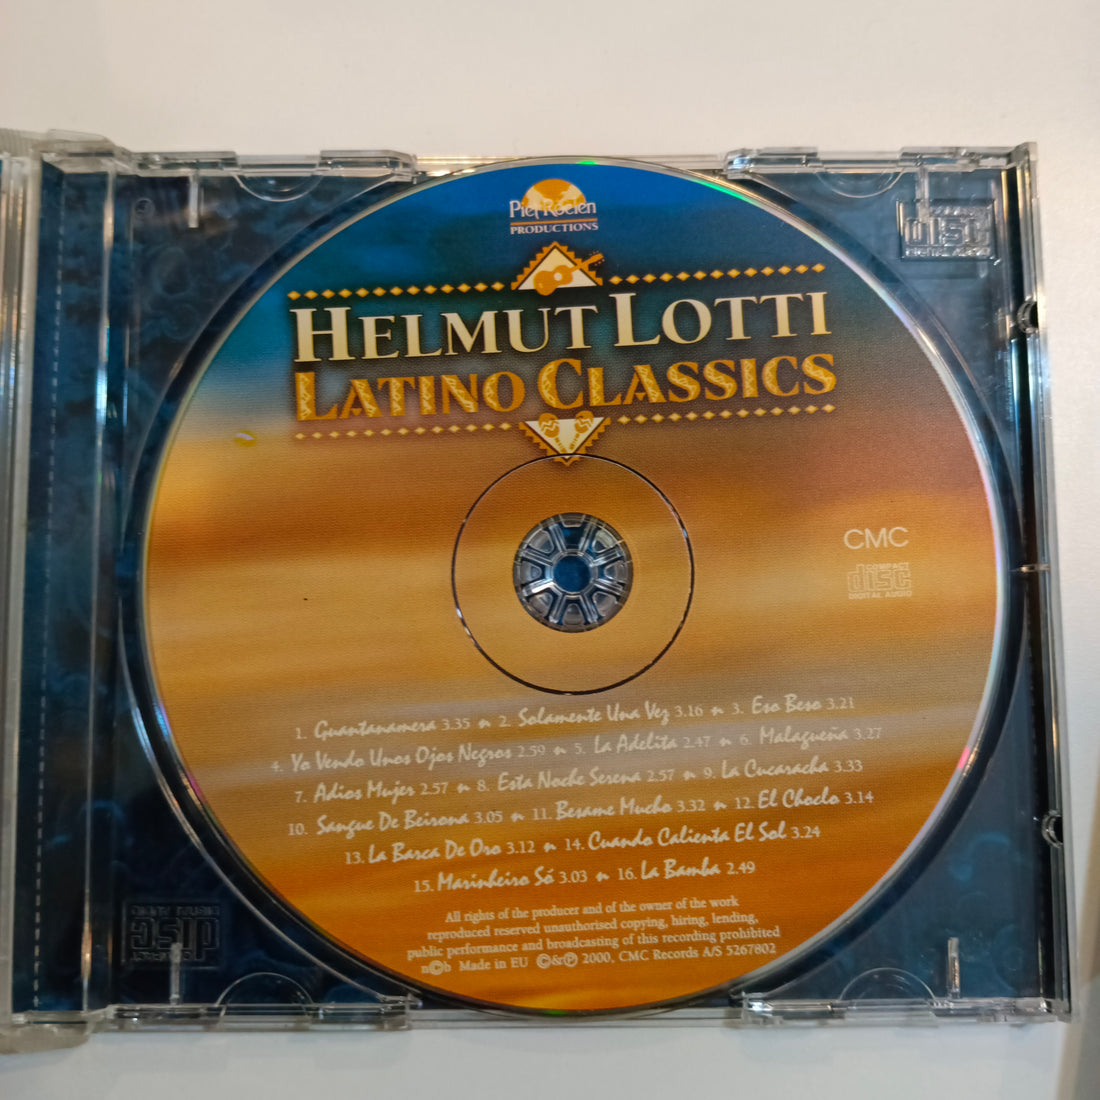 Helmut Lotti With Golden Symphonic Orchestra - Latino Classics (CD) (VG+)